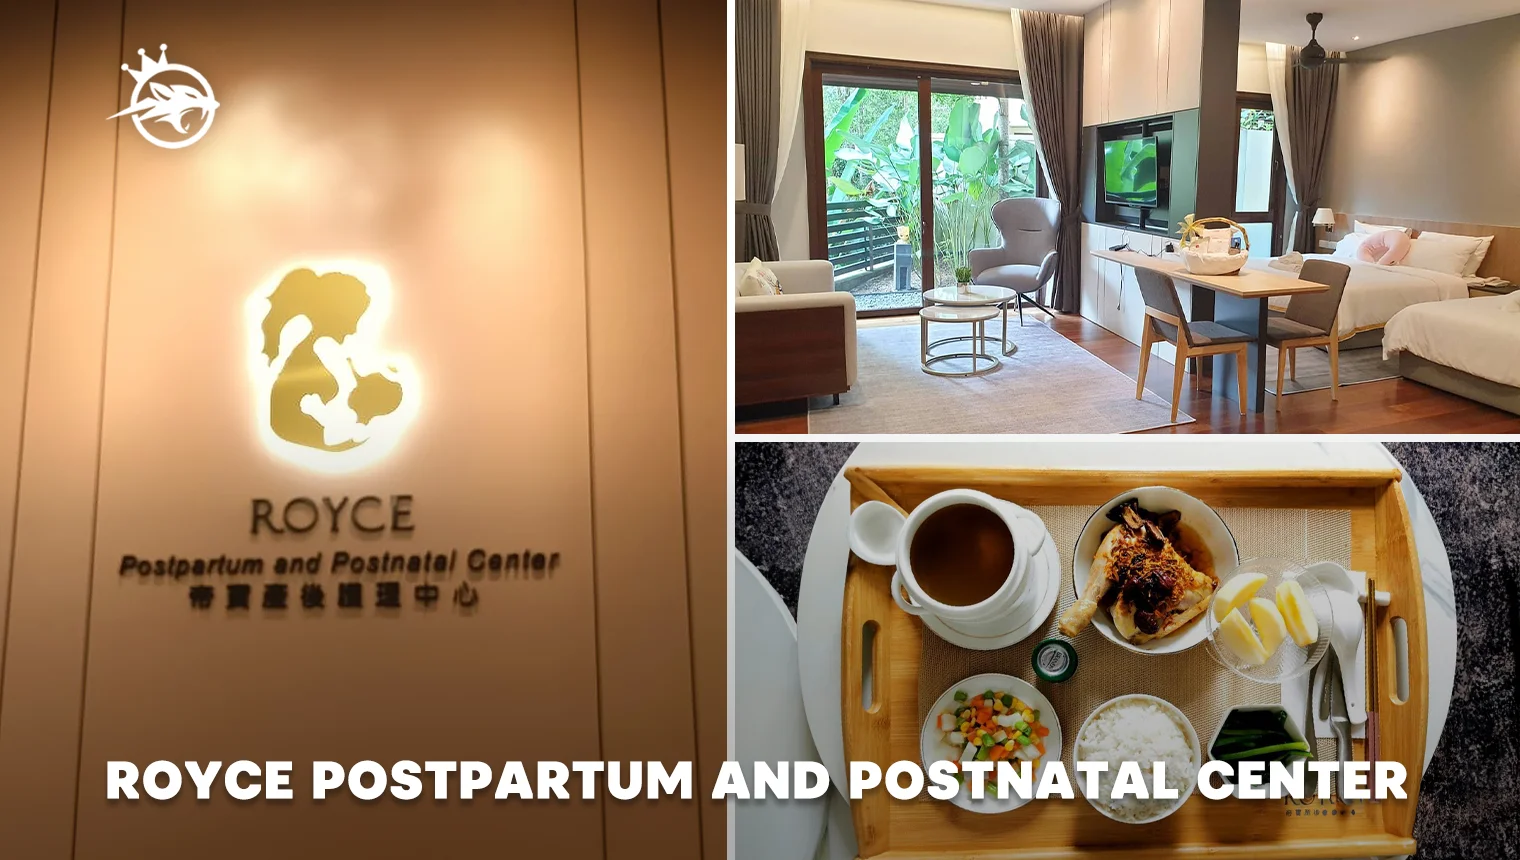 Royce Postpartum and Postnatal Center